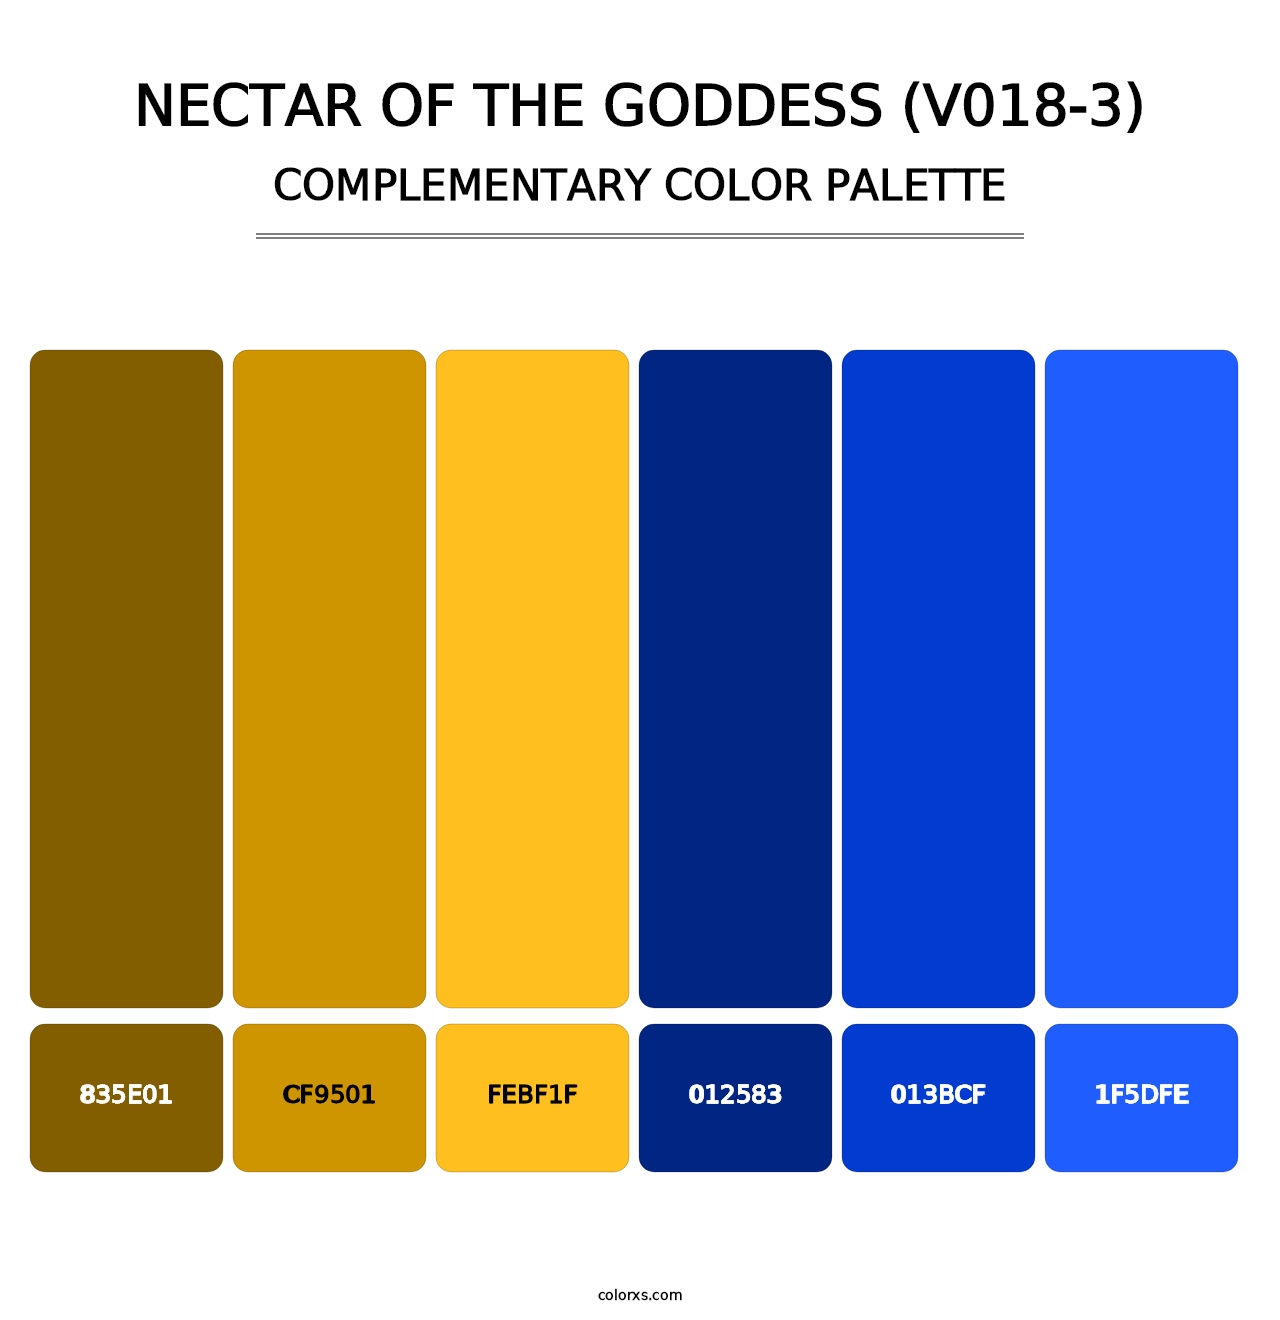 Nectar of the Goddess (V018-3) - Complementary Color Palette